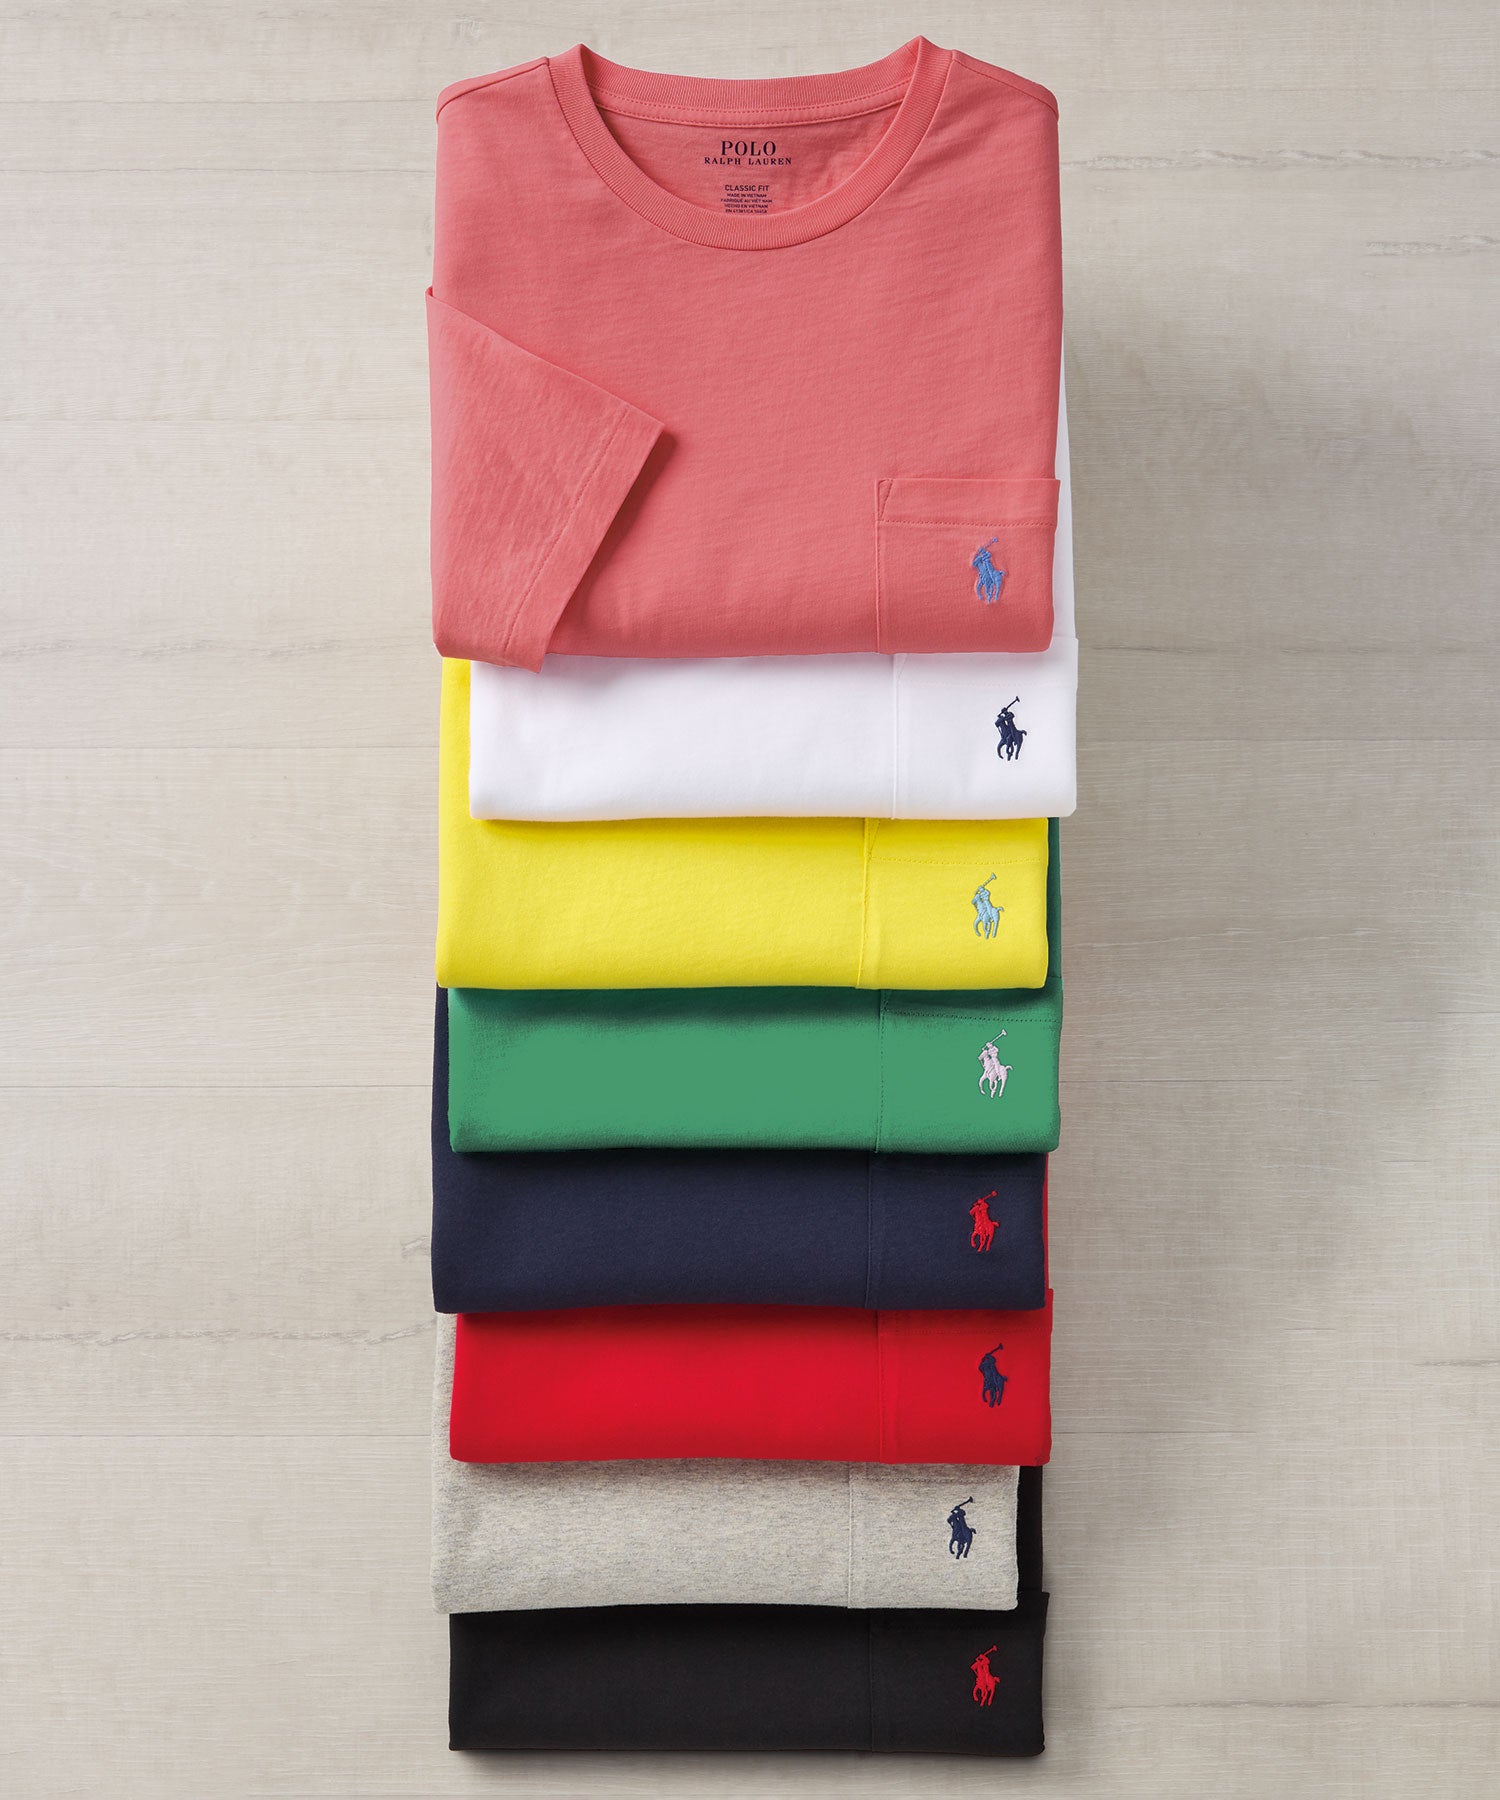 Polo Ralph Lauren Short Sleeve Solid Pocket Crewneck Tee Shirt - Big Tall